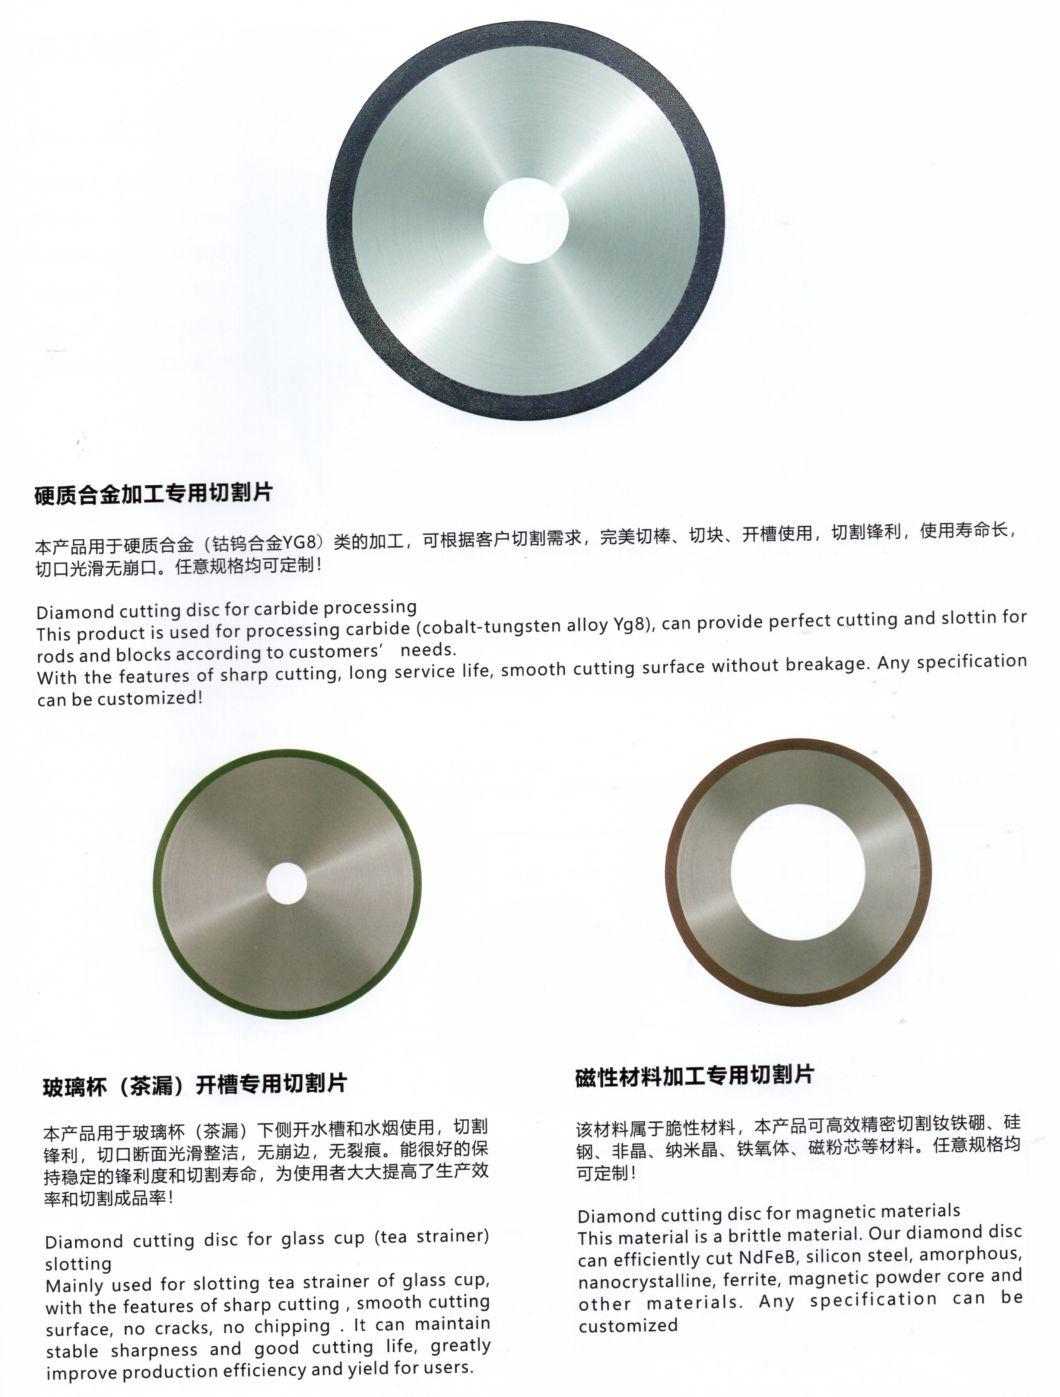 Resin Bond Ultrathin Diamond Cutting Disc for Optical Glass